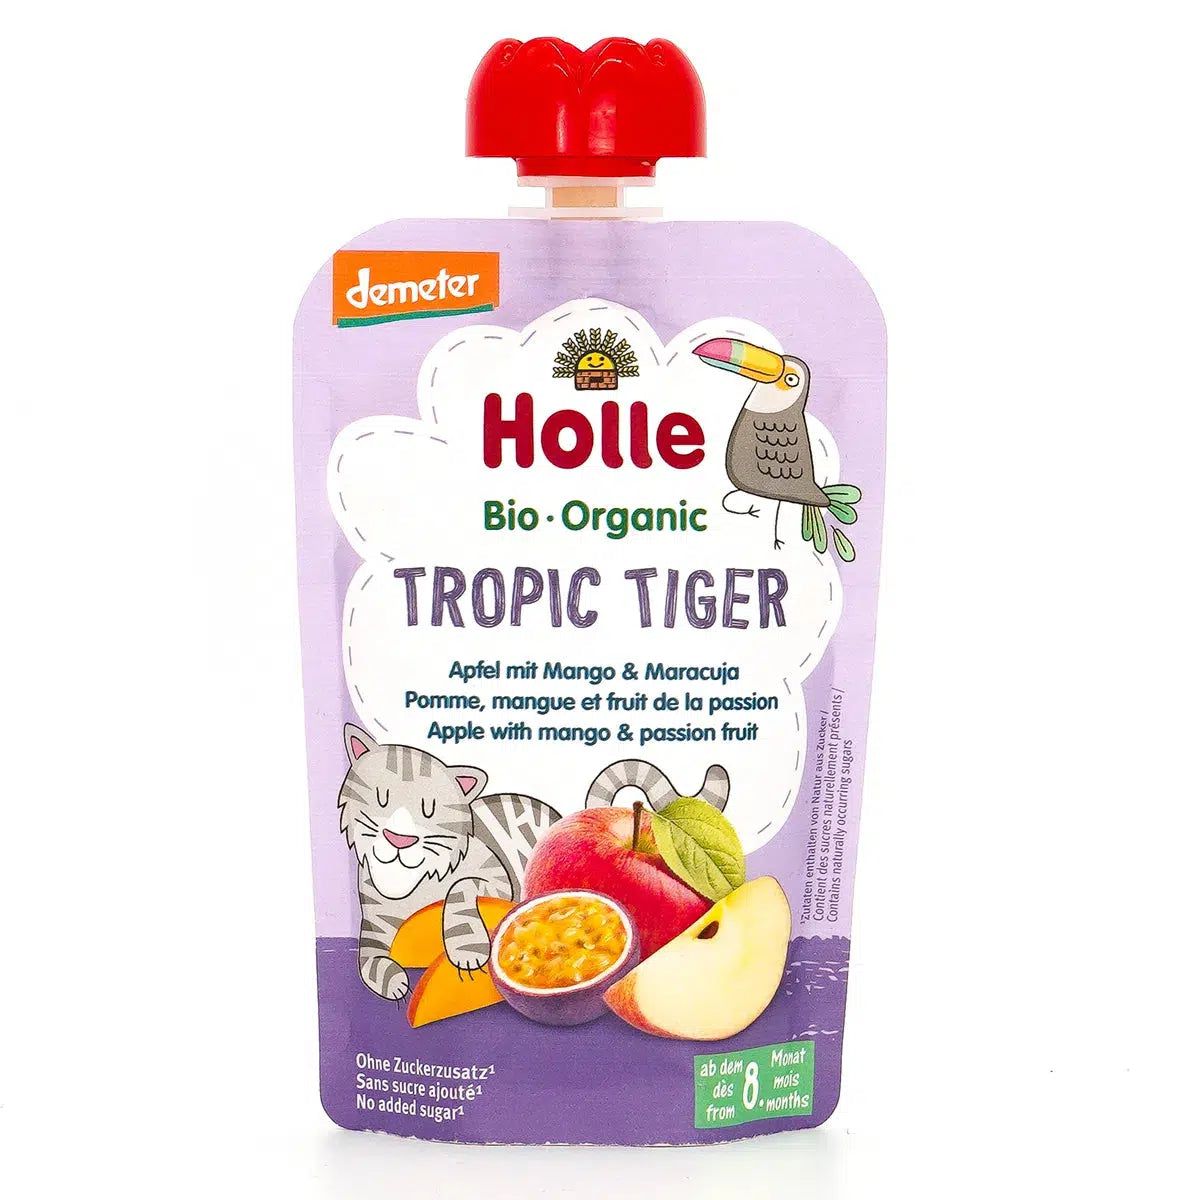 Holle Tropic Tiger: Apple, Mango & Passion Fruit (8+ Months) - 12 Pouches